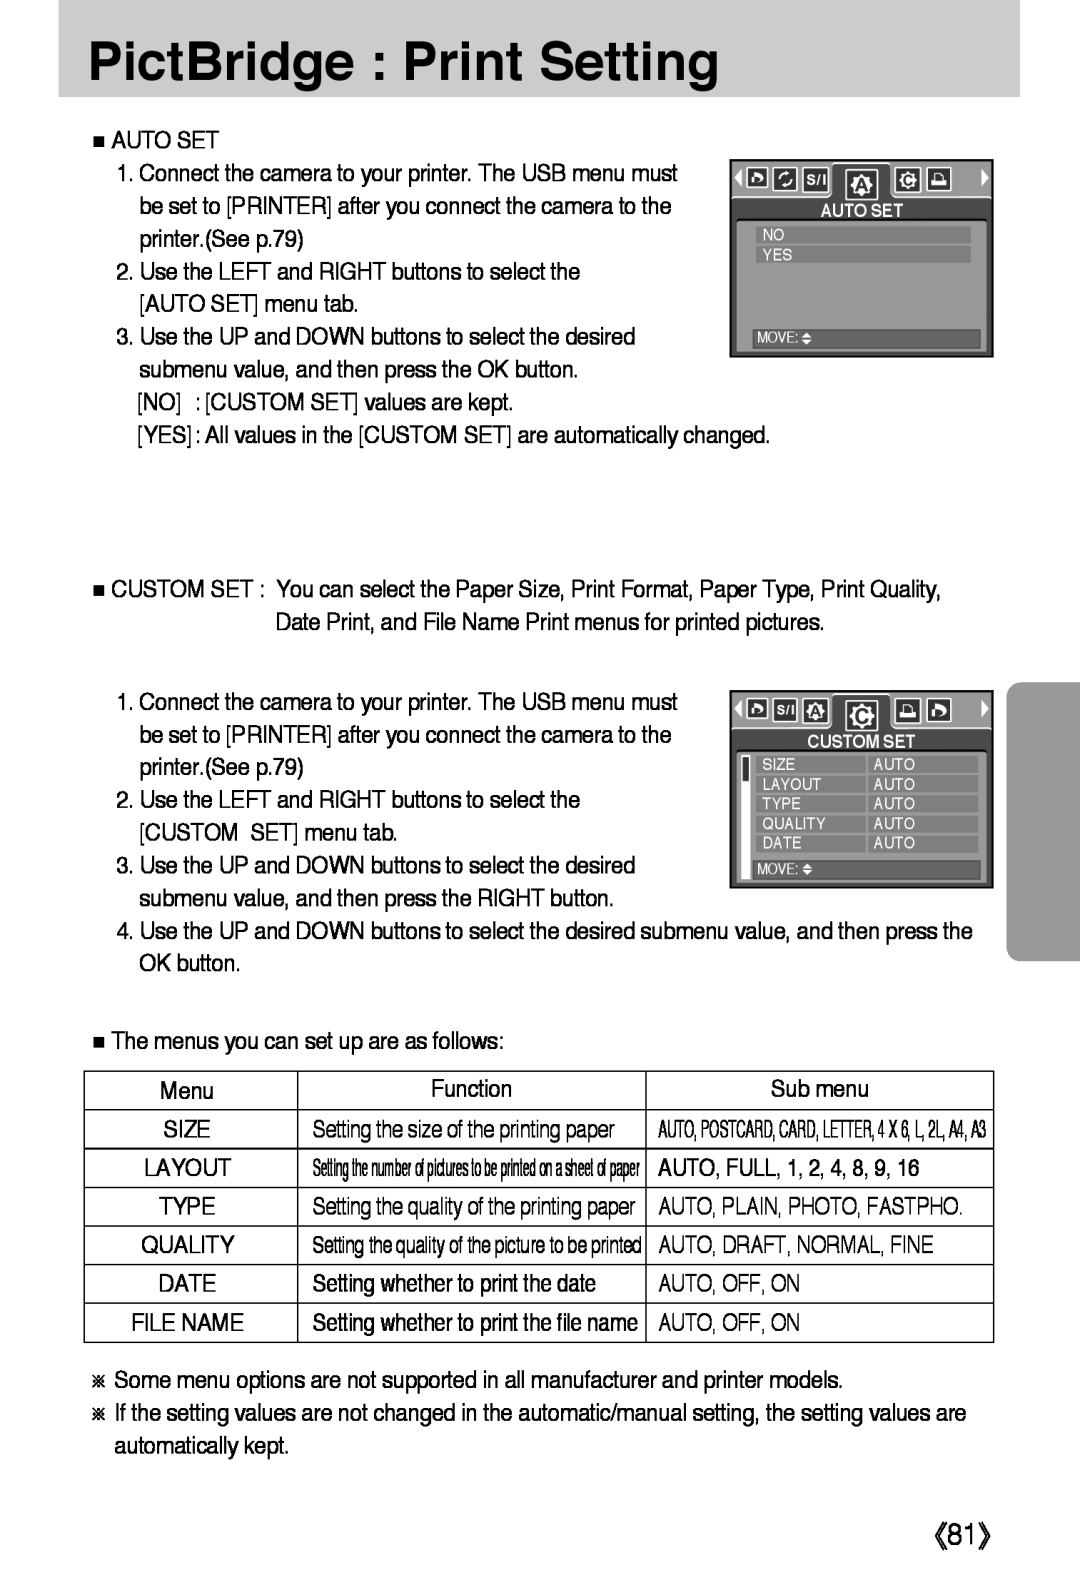 Samsung L50 user manual PictBridge Print Setting, 《81》 